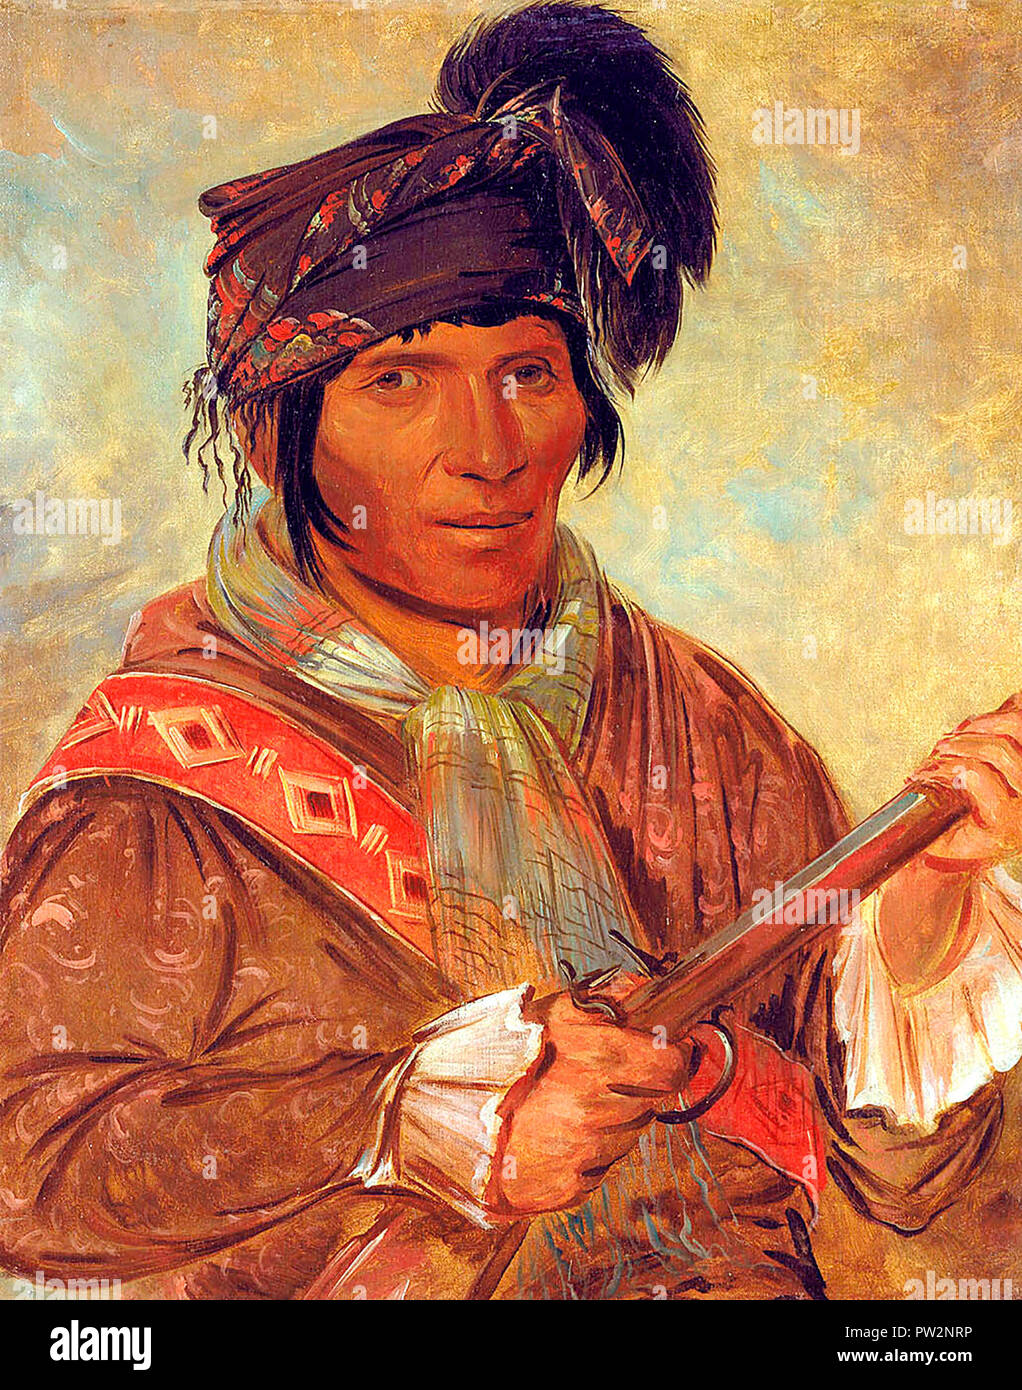 Co-ee-há-jo, a Seminole Chief, George Catlin, 1837 Stock Photo